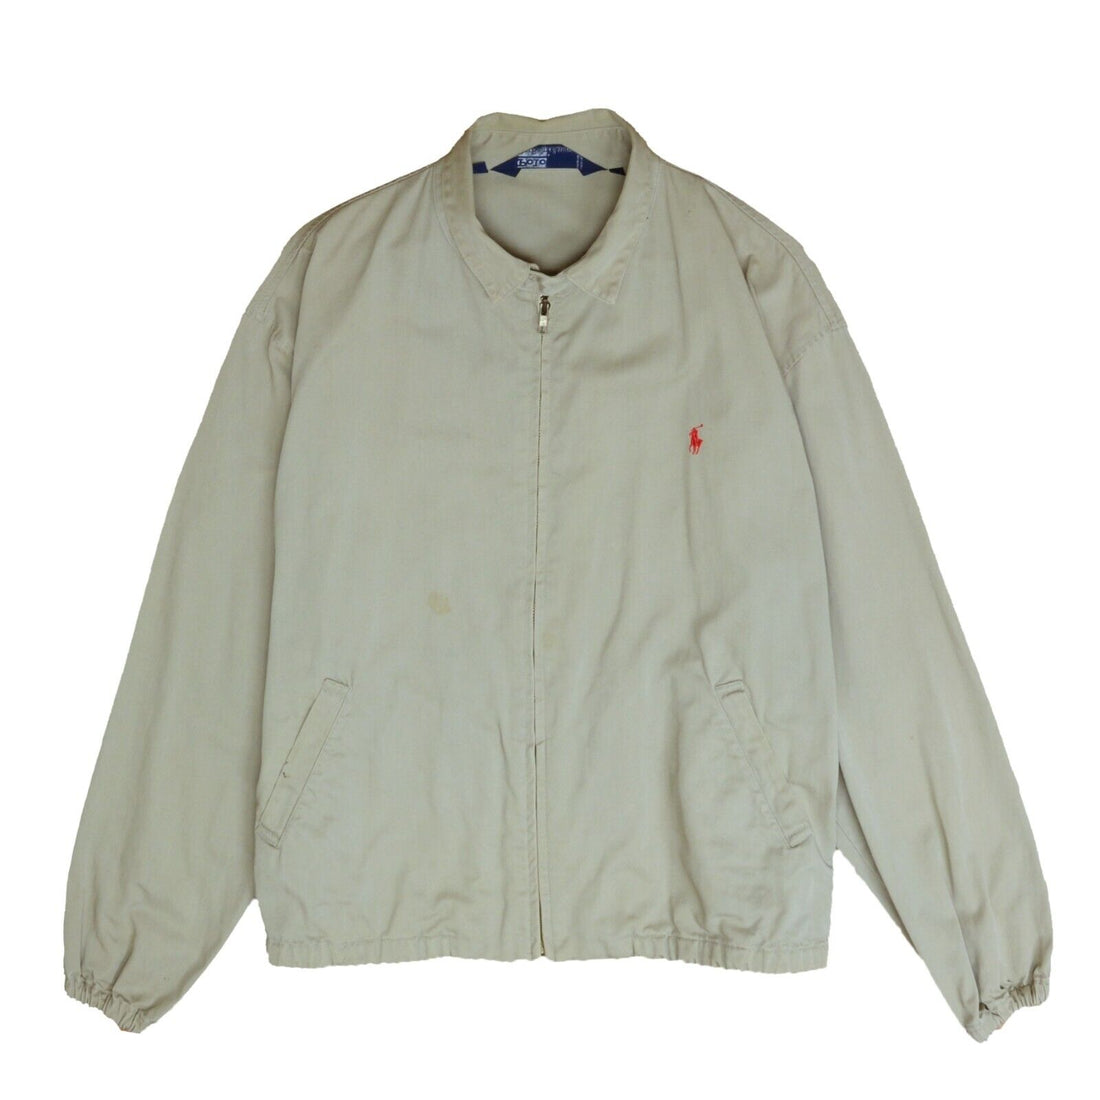 Vintage Polo Ralph Lauren Harrington Bomber Jacket Size XL Beige